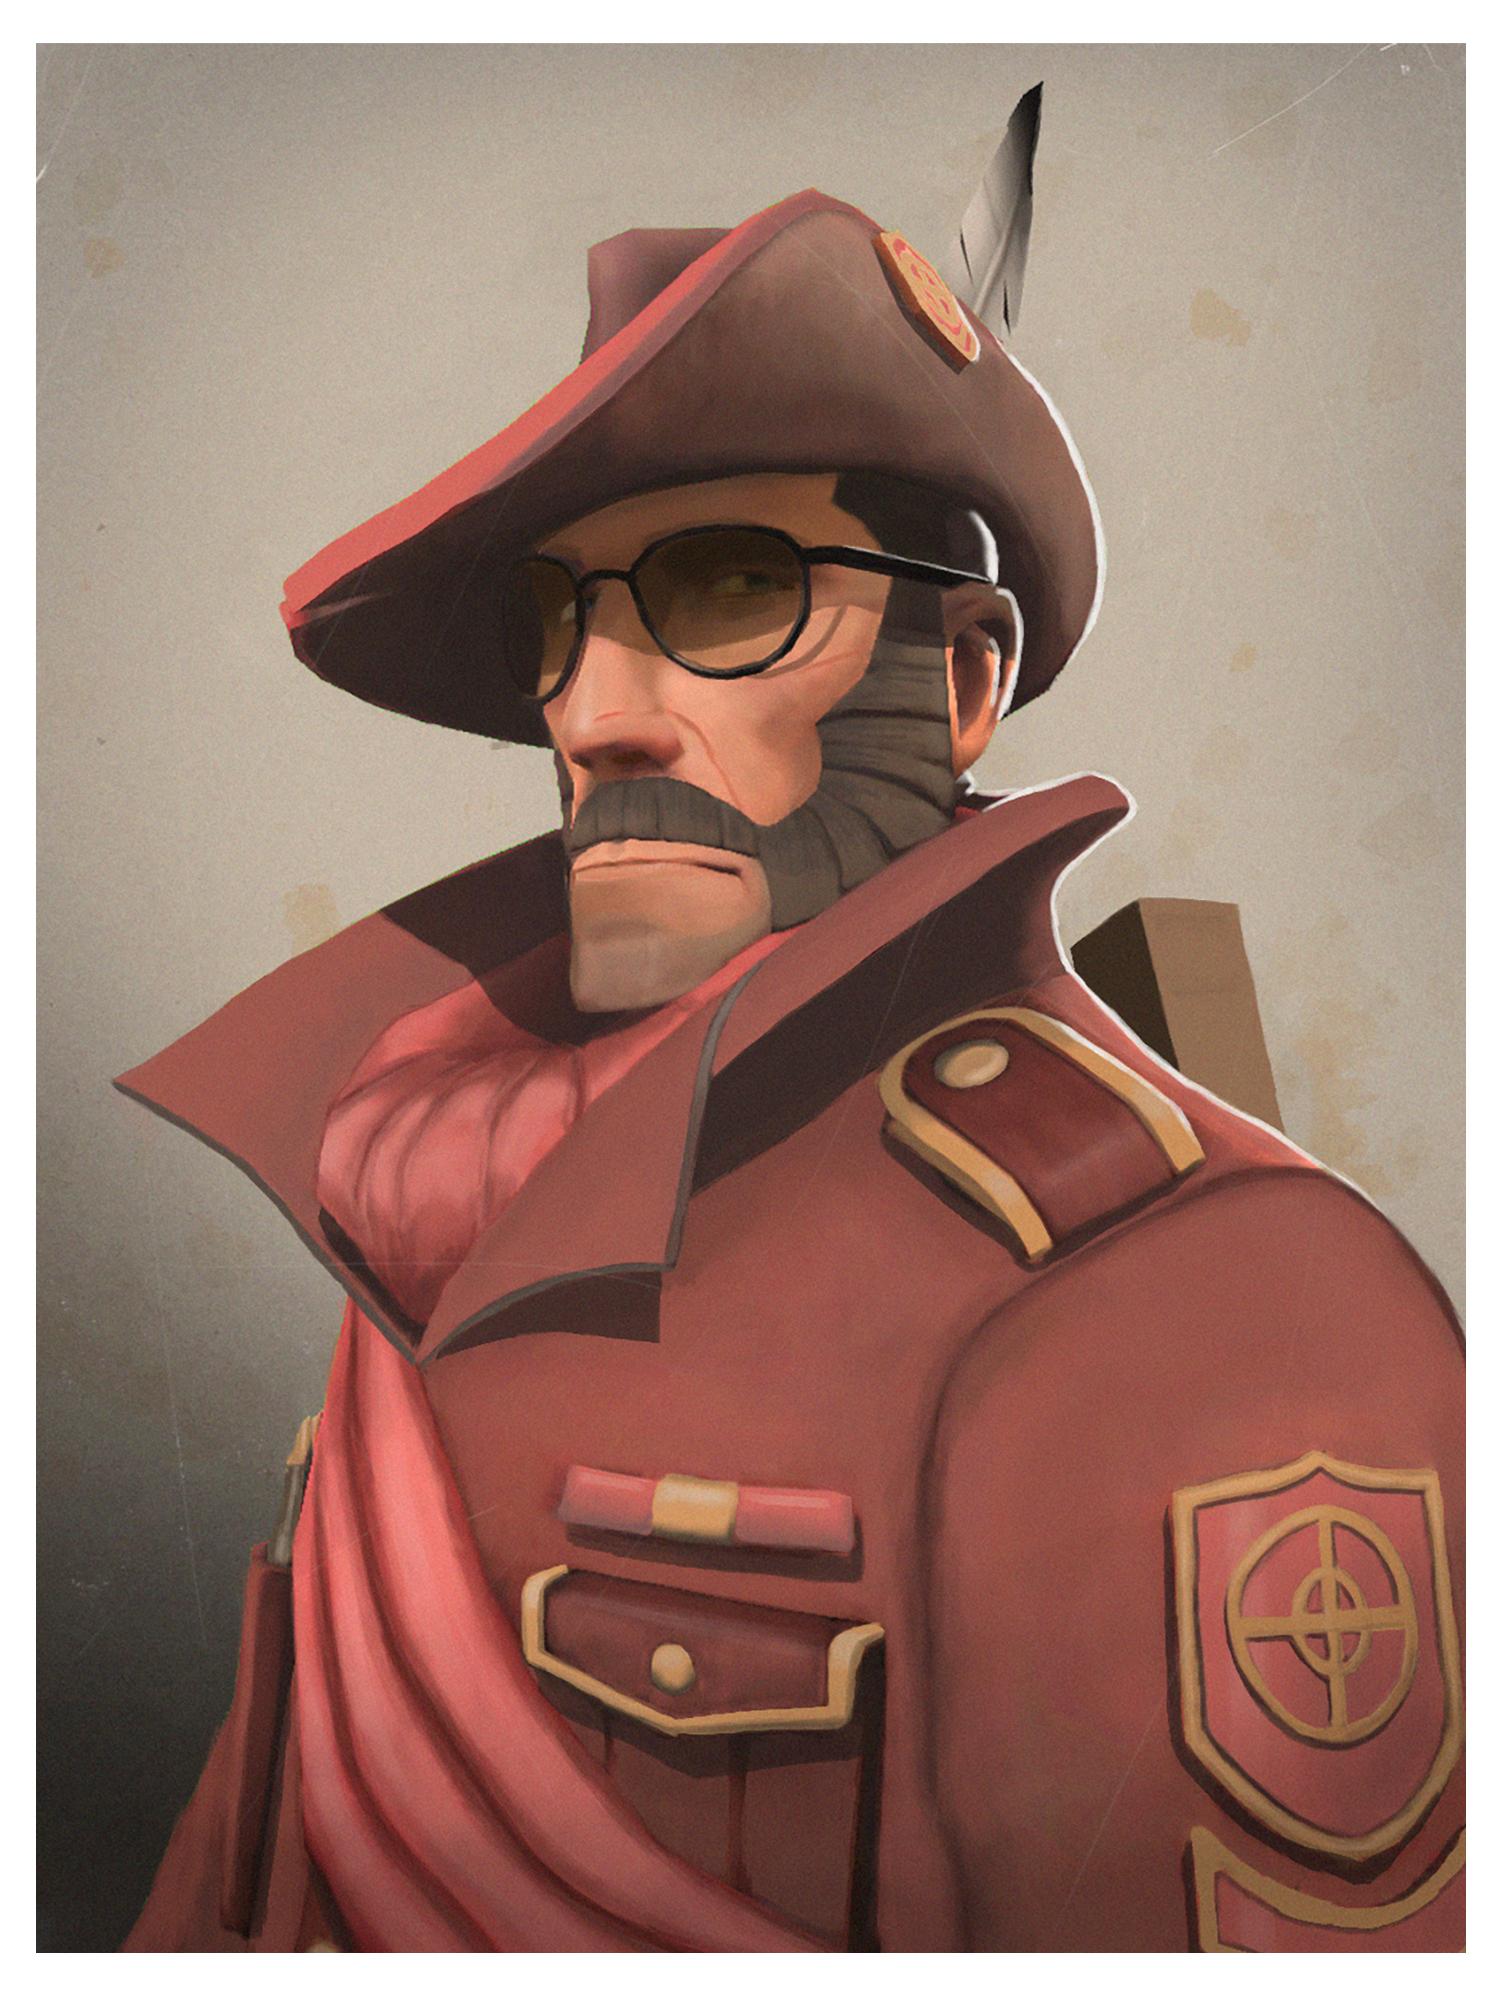 “[/r/tf2 art] The Sniper (Style: Valve Portrait Poster) https://t.co/N9iKMP...